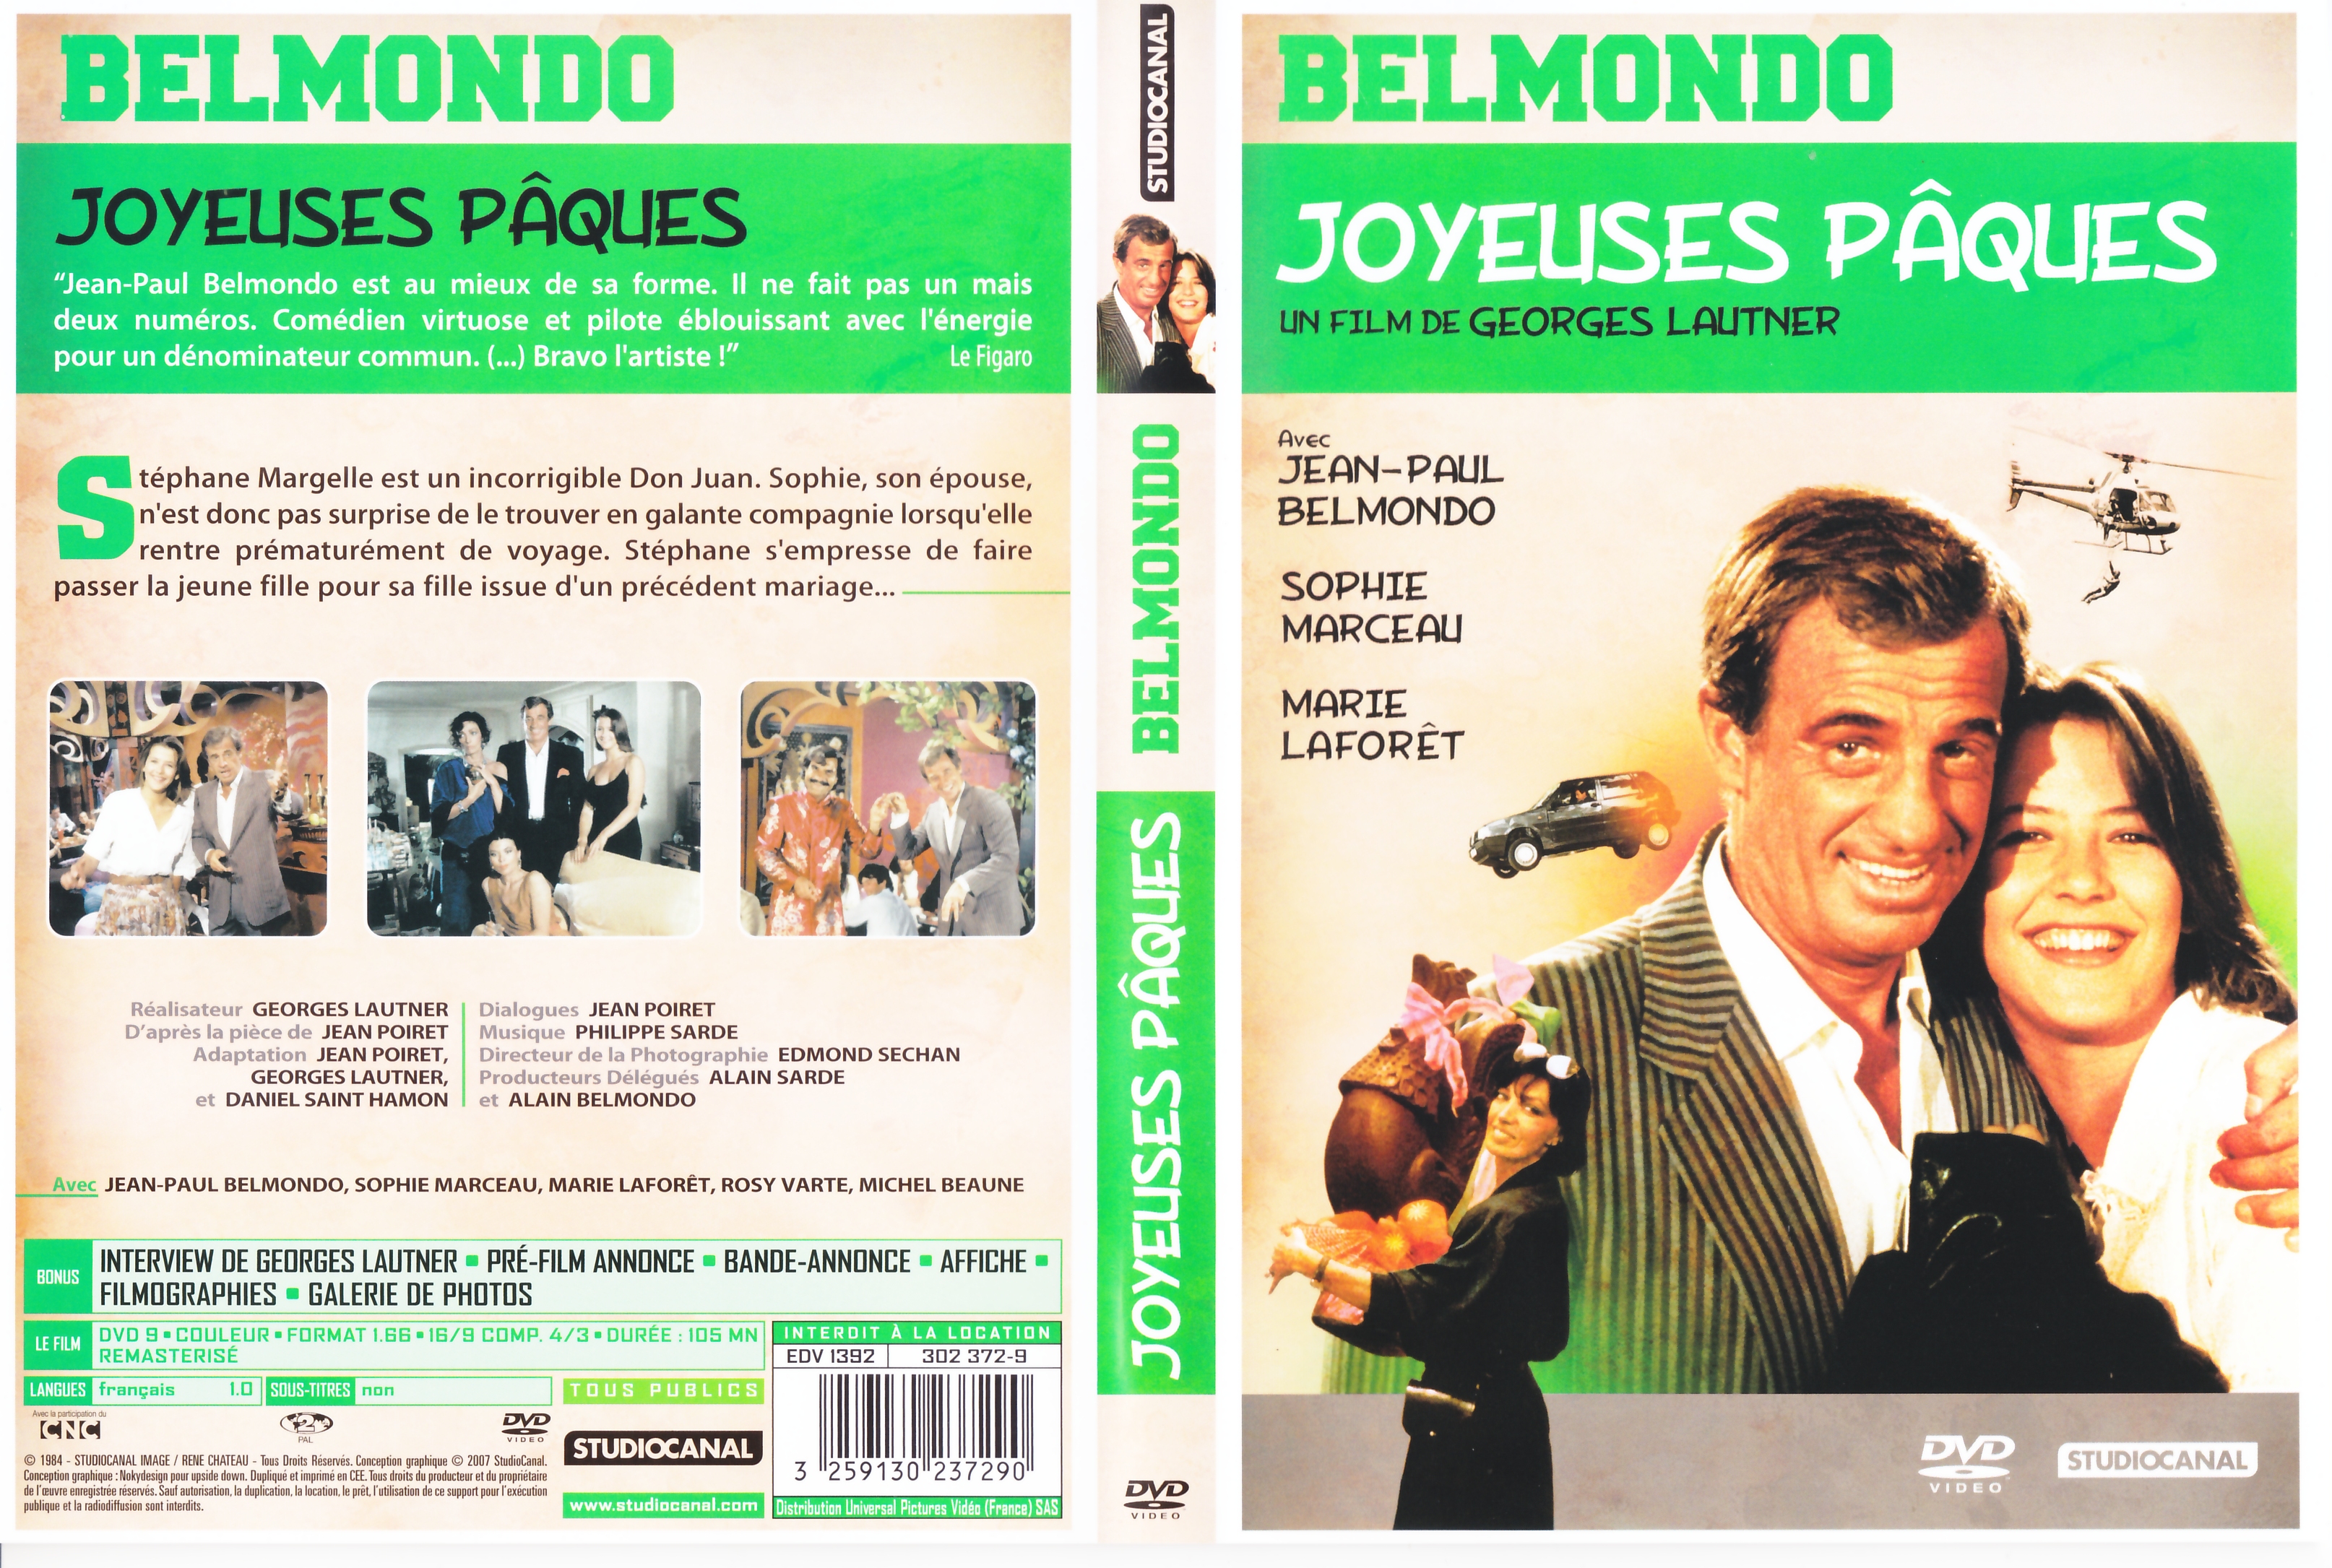 Jaquette DVD Joyeuses Pques v3